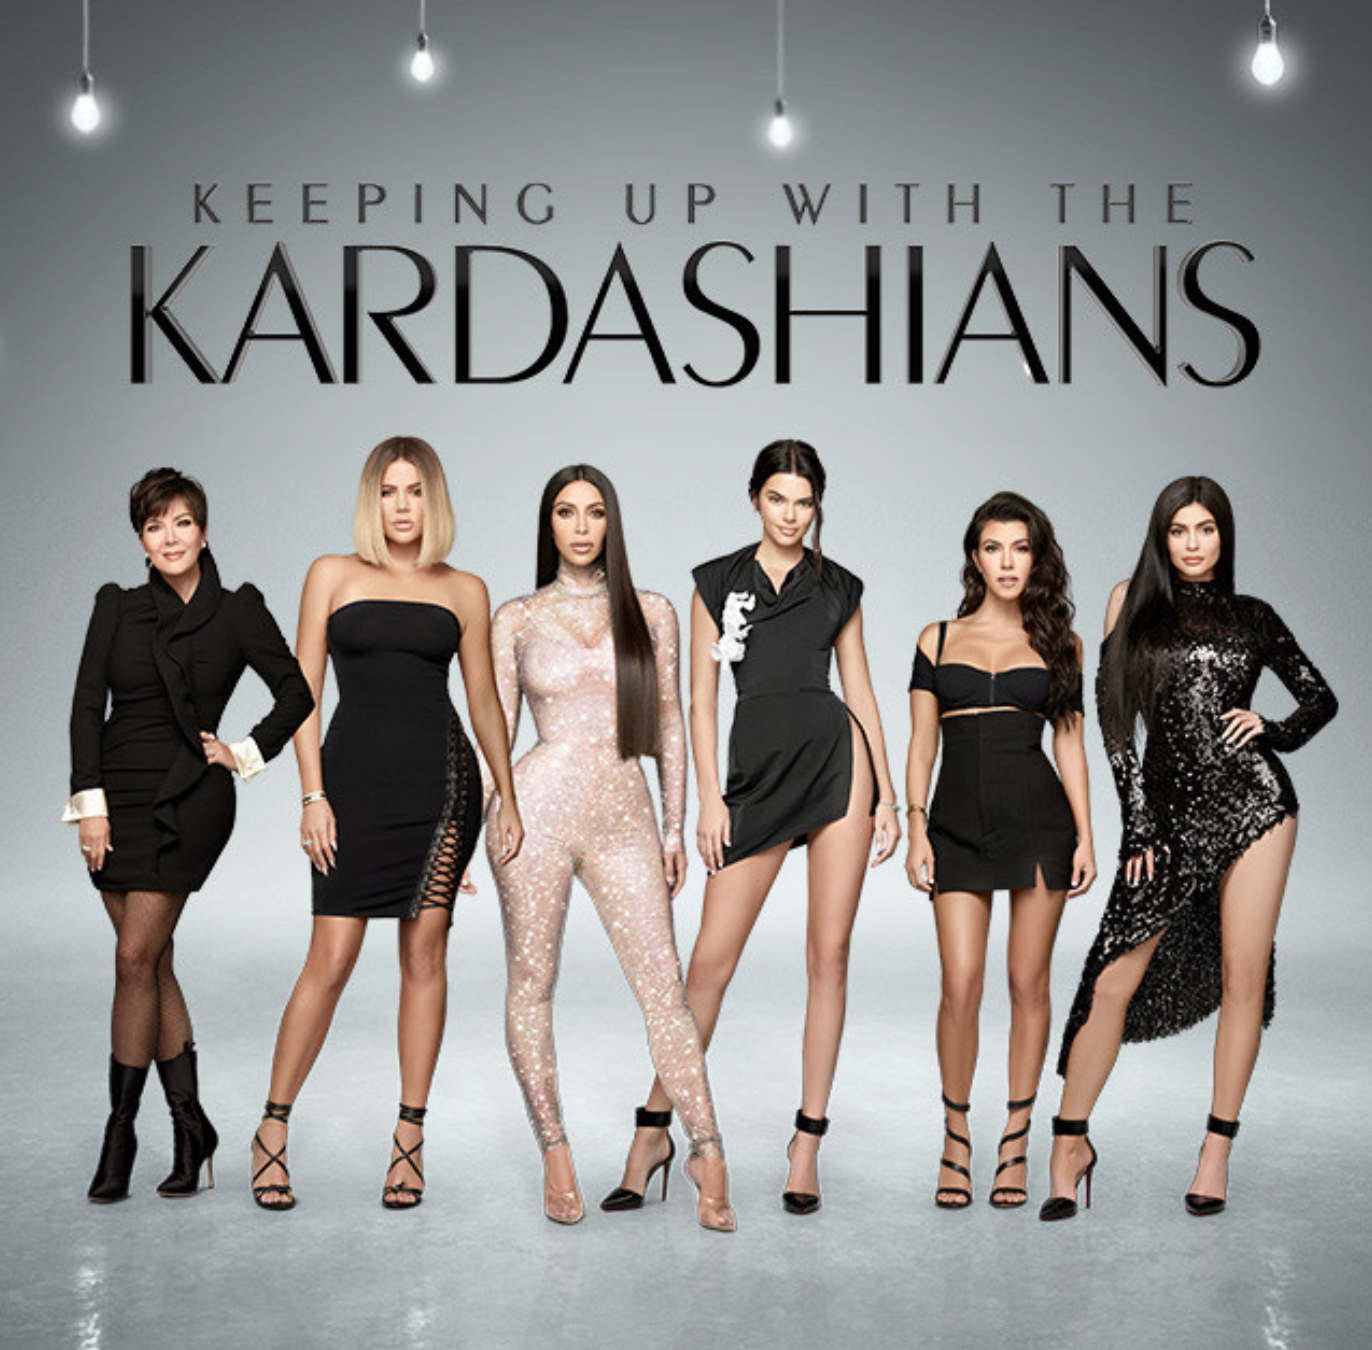 Photo of The Kardashians  courtesy of NBC Universal.